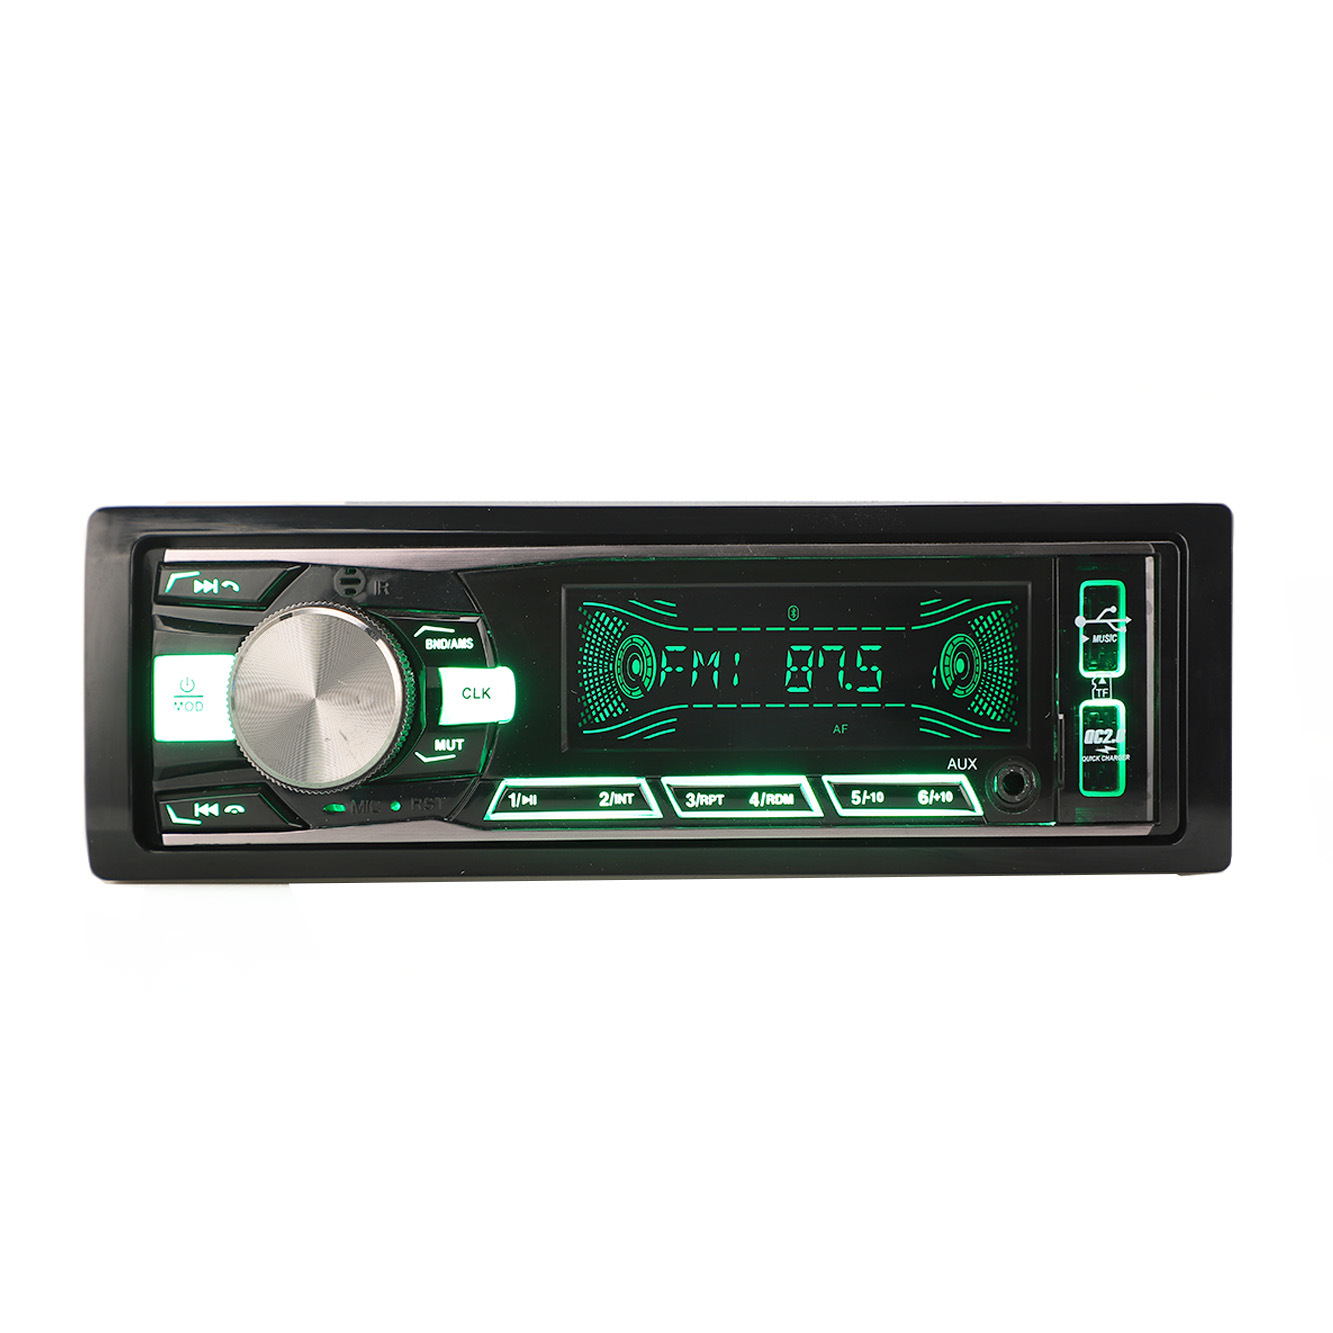 Auto Teil Auto LCD Player Auto Video Player Video Audio Fixed Panel Player FM Auto Stereo Audio Radio Auto MP3 Player